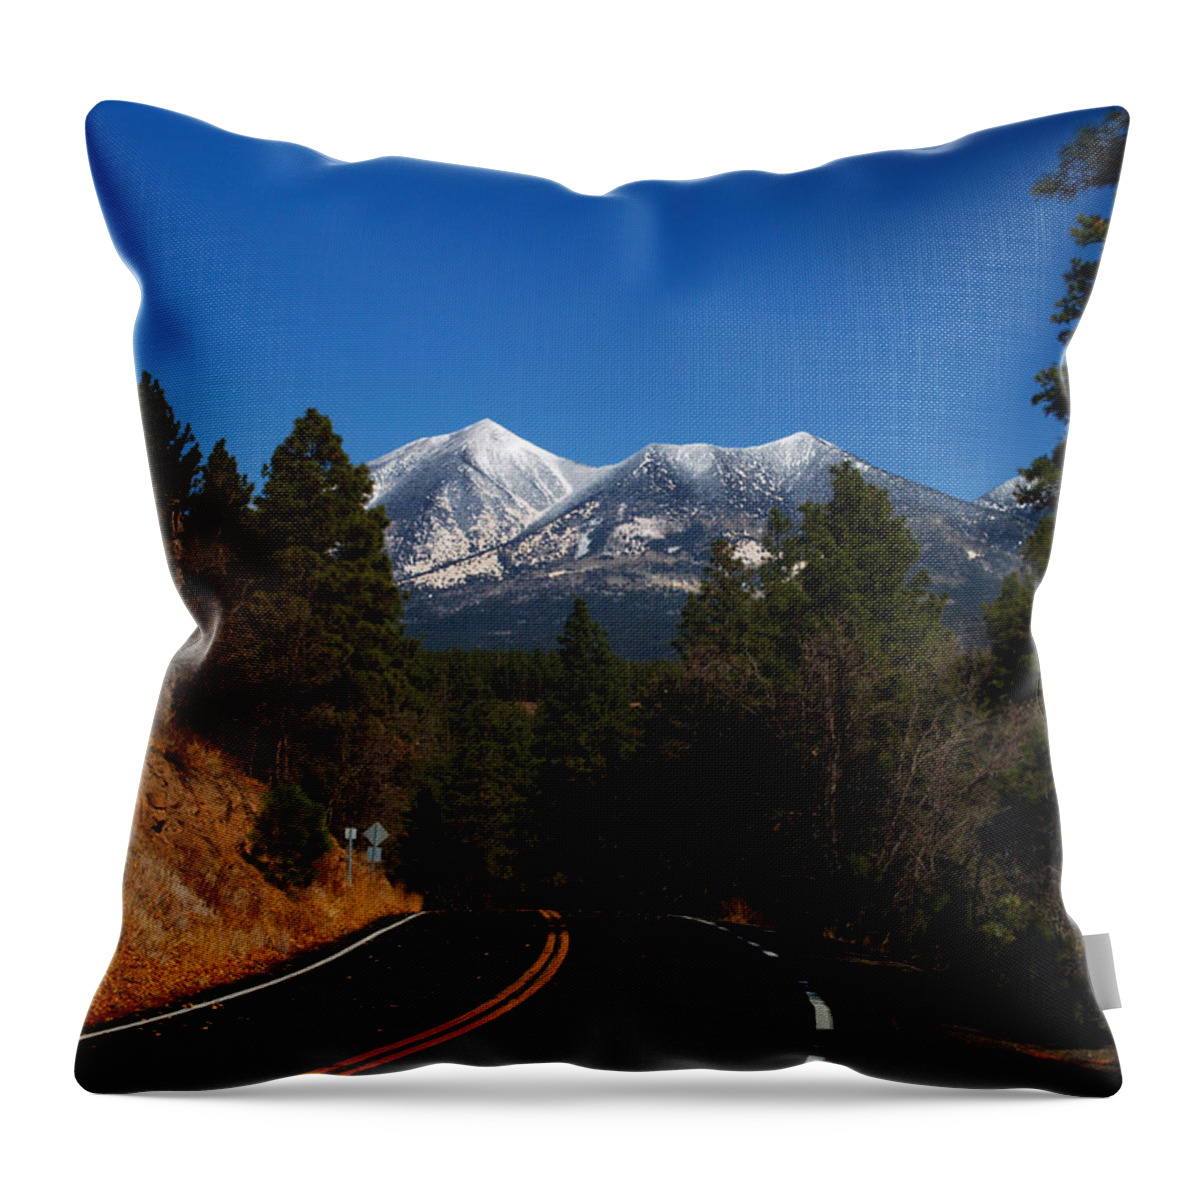 Arizona Throw Pillow featuring the photograph Arizona Country Road by Joshua House